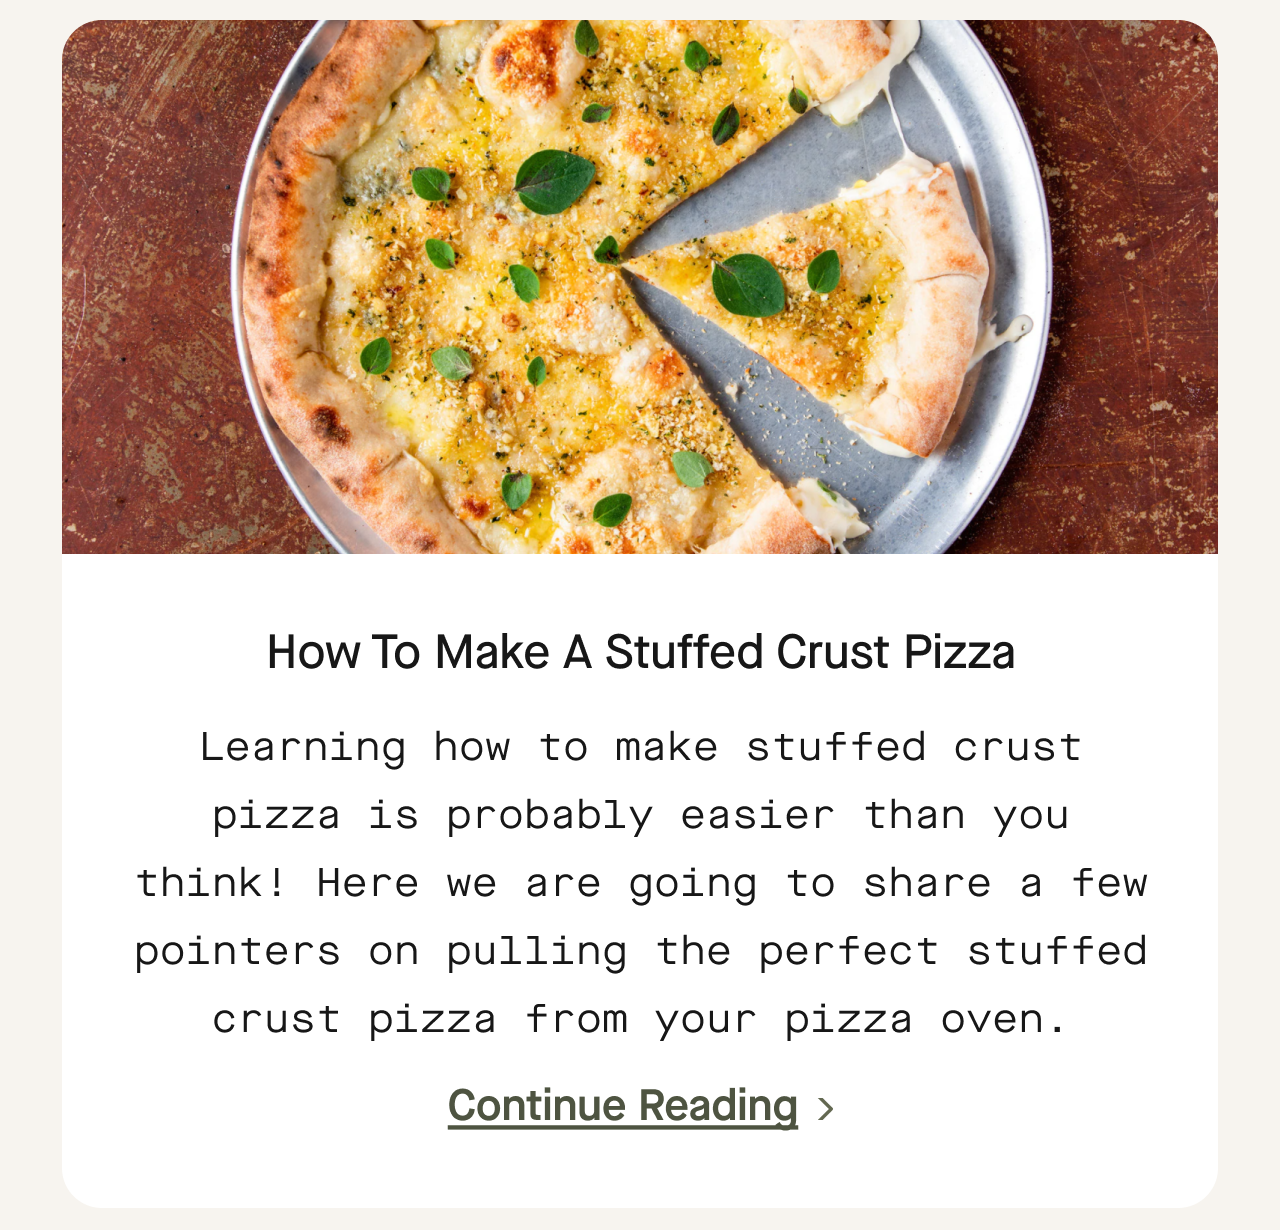 How To Make A Stuffed Crust Pizza